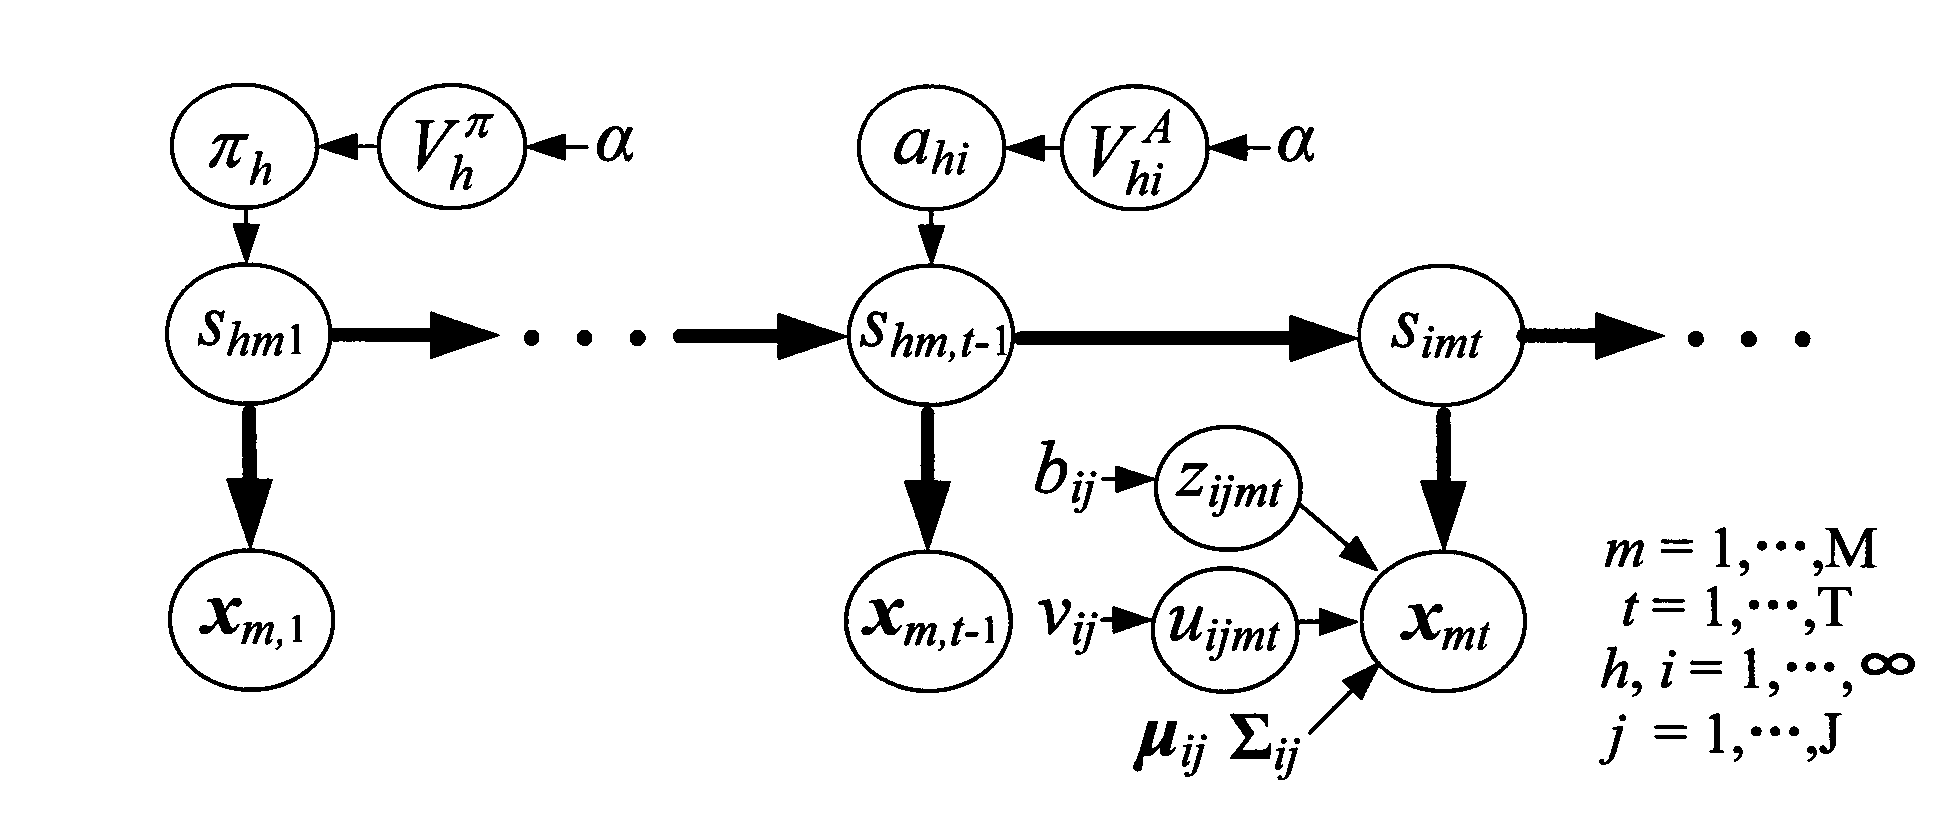 Text-related speaker recognition method based on infinite-state hidden Markov model